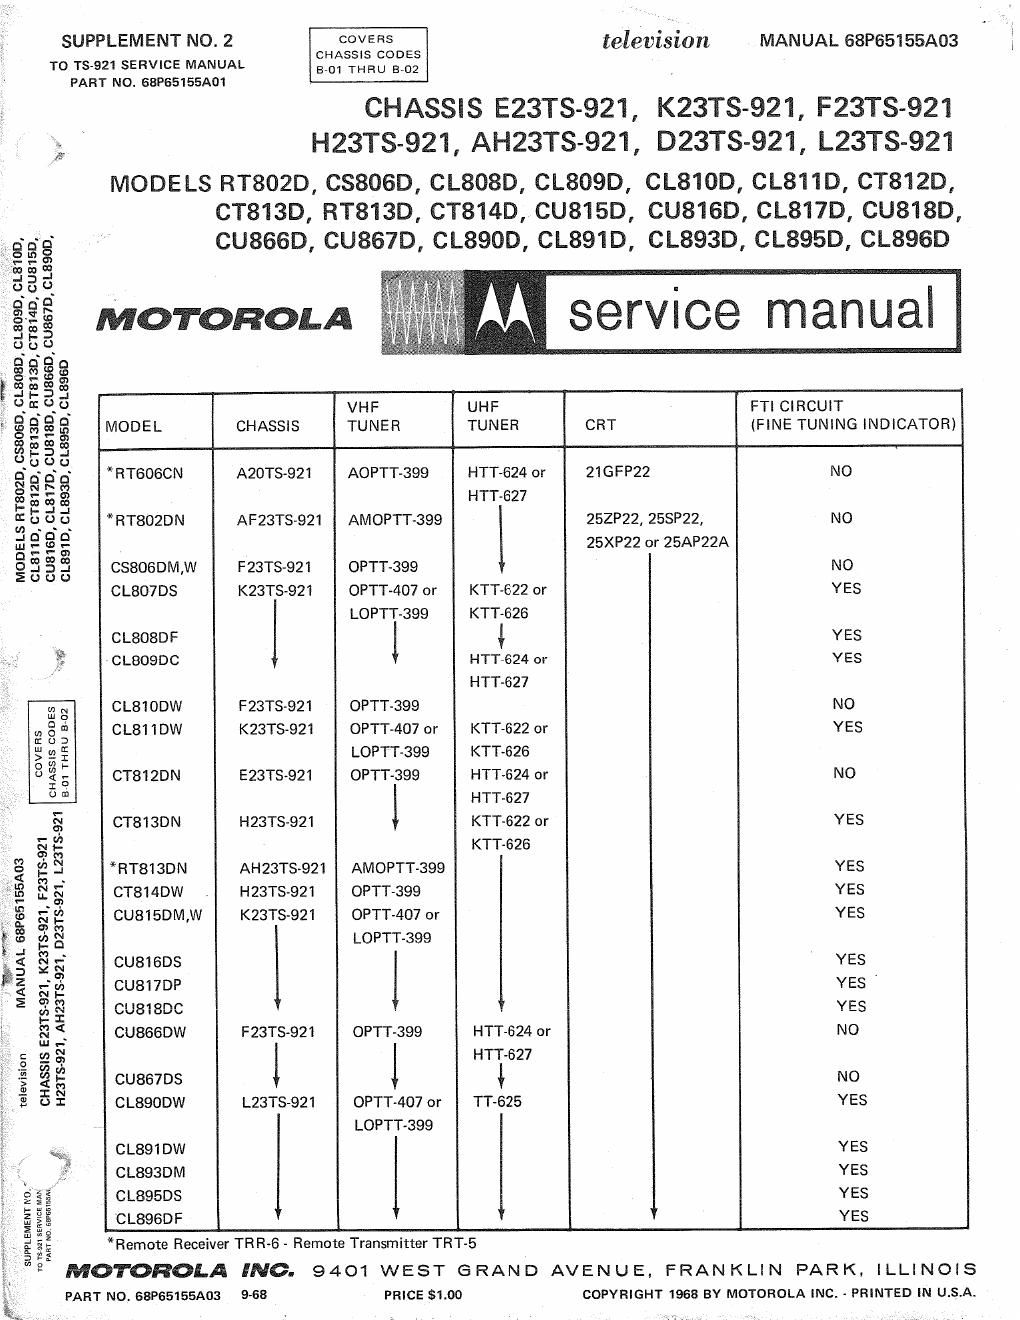 motorola rt 813 d service manual